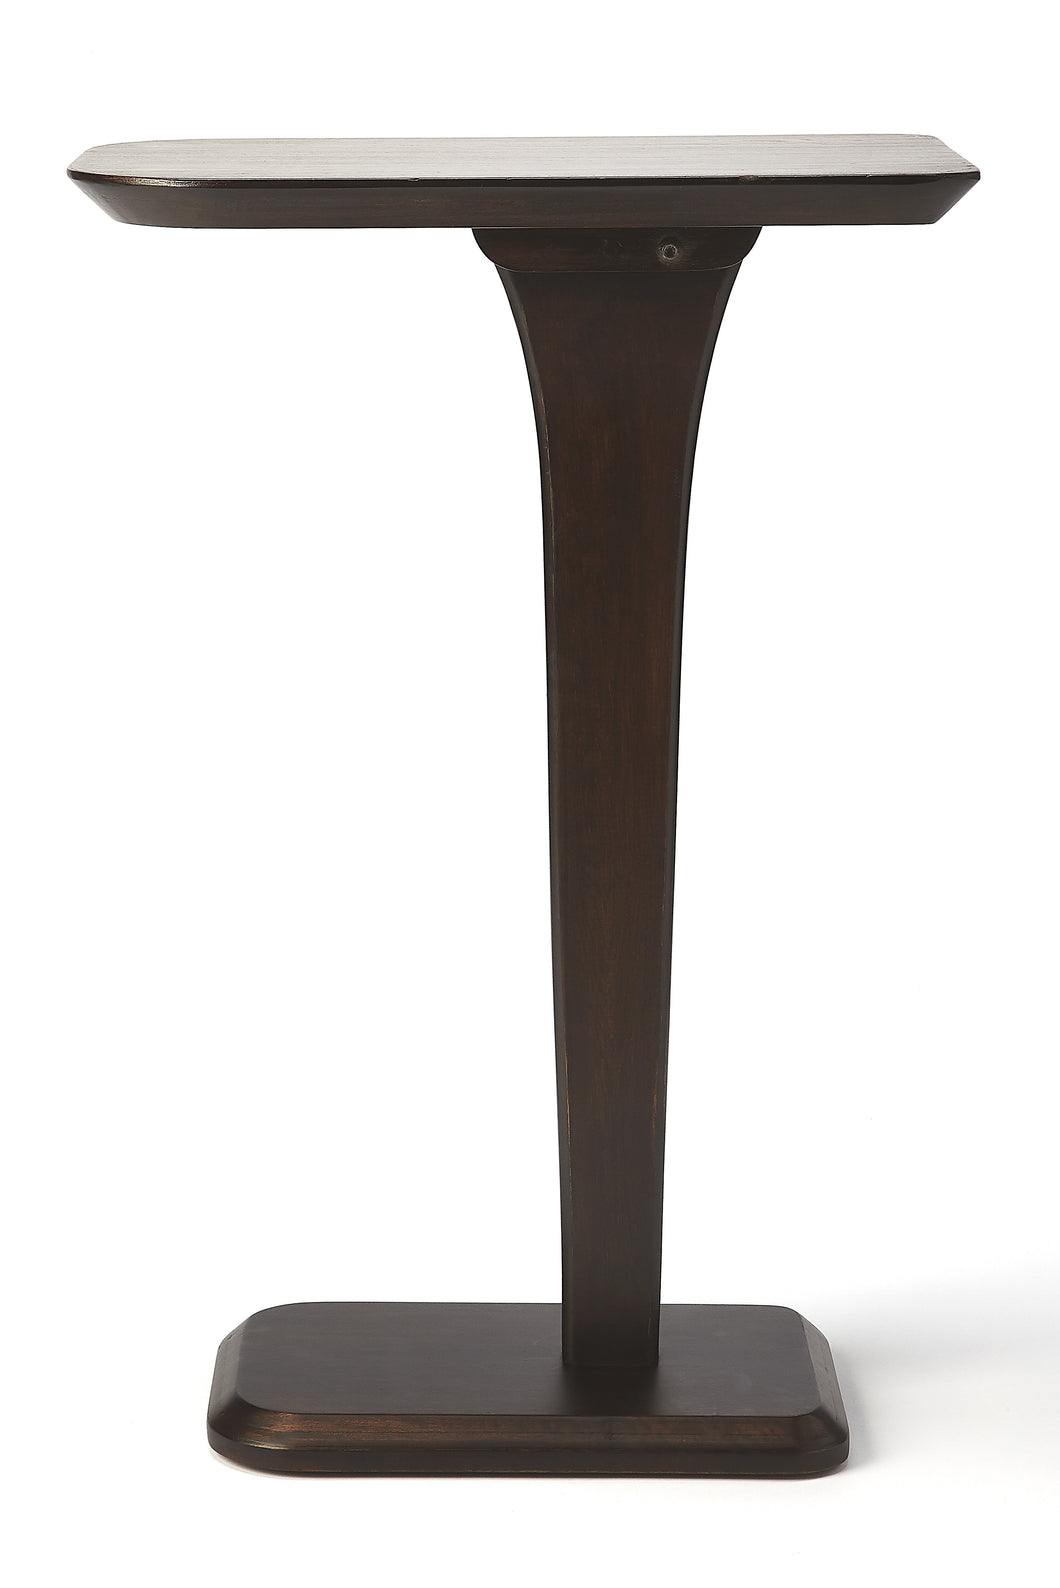 Patton Cocoa Brown Pedestal Table